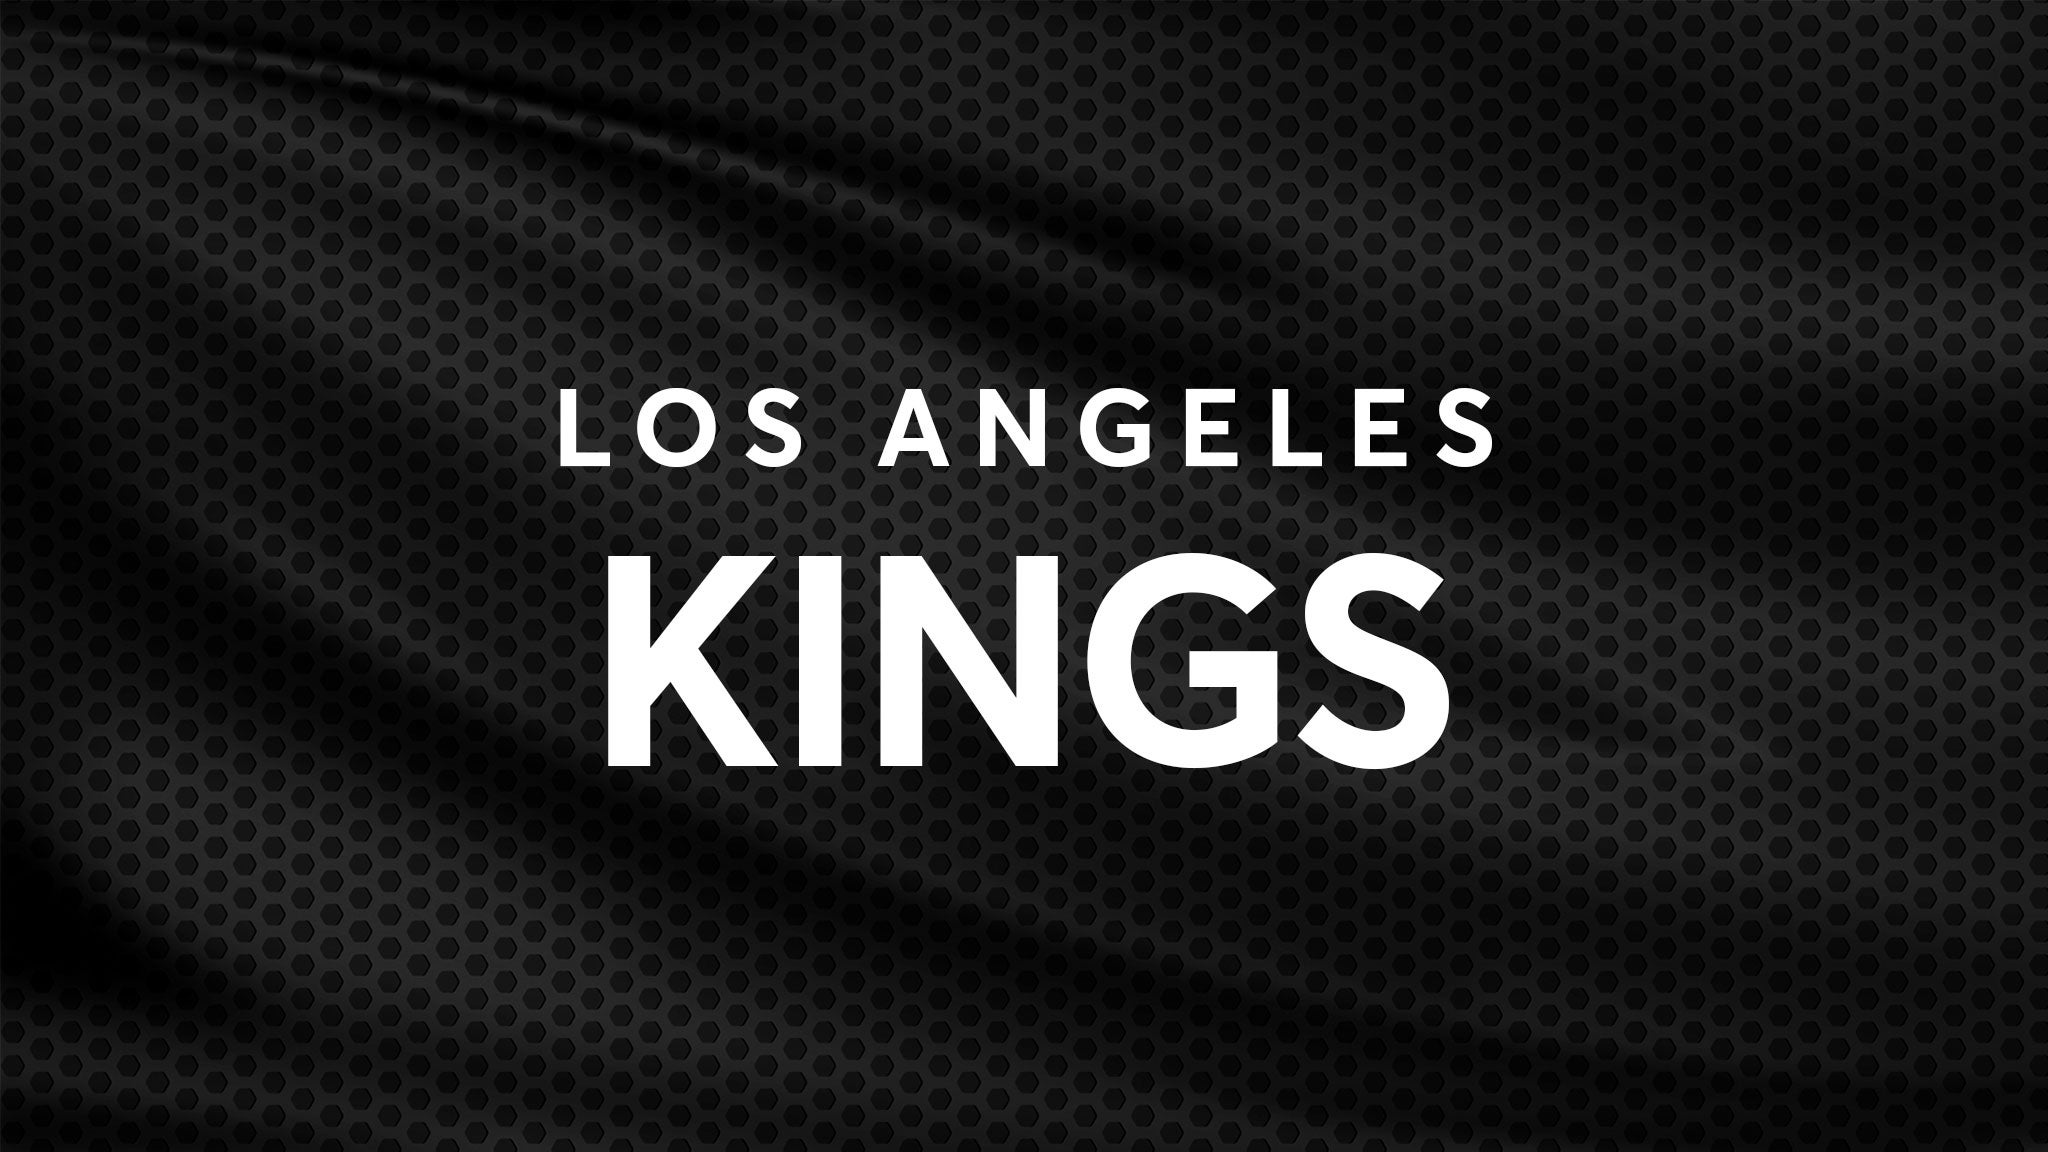 Los Angeles Kings vs. Toronto Maple Leafs